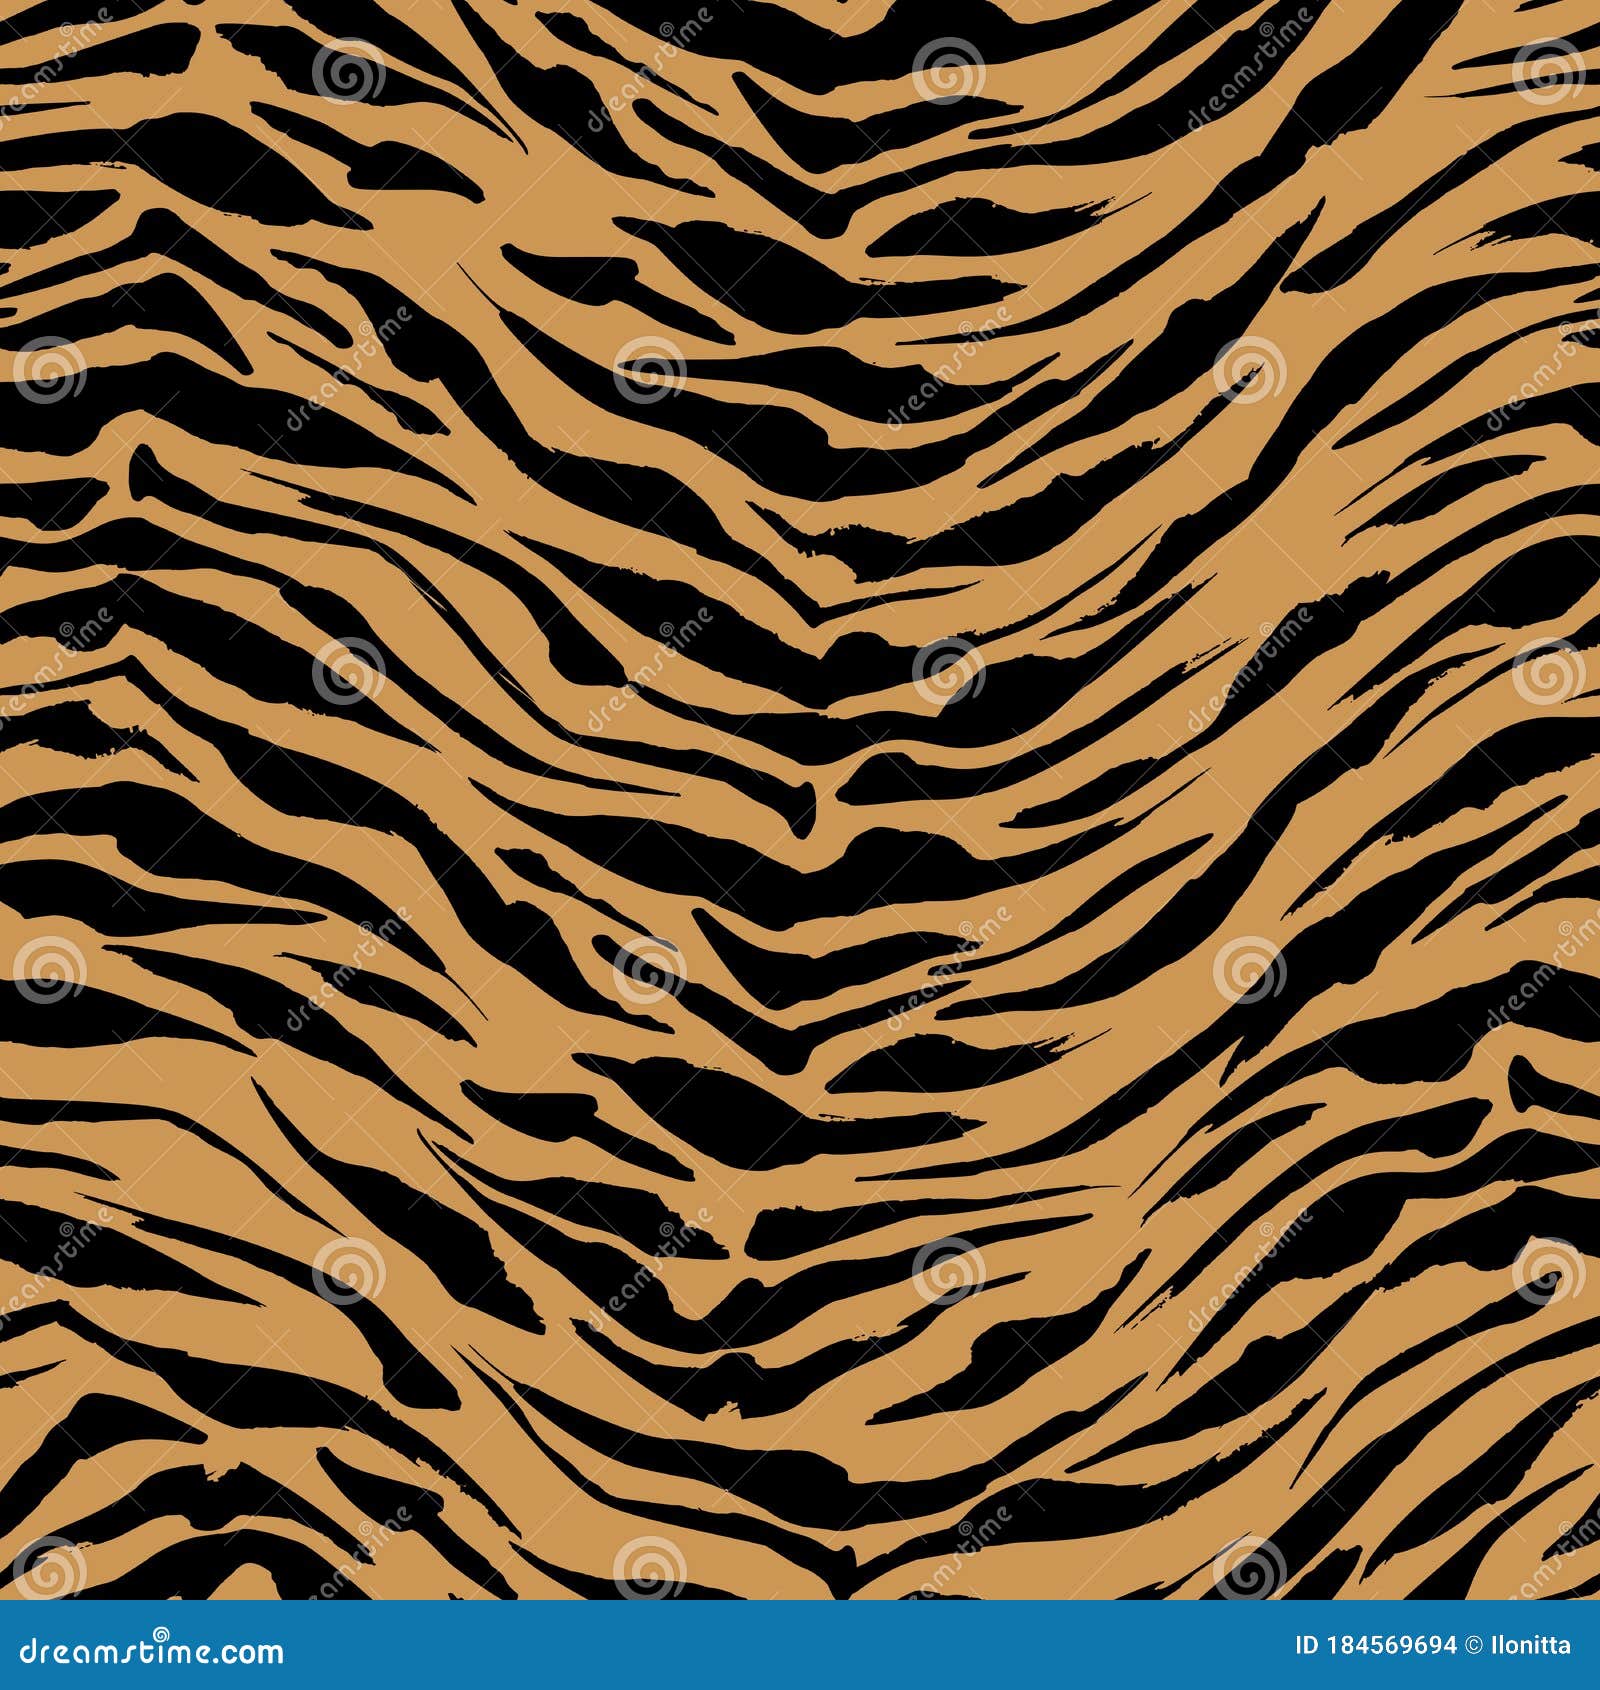 Realistic Orange Safari Pattern Background Tiger Animal Skin Stock ...